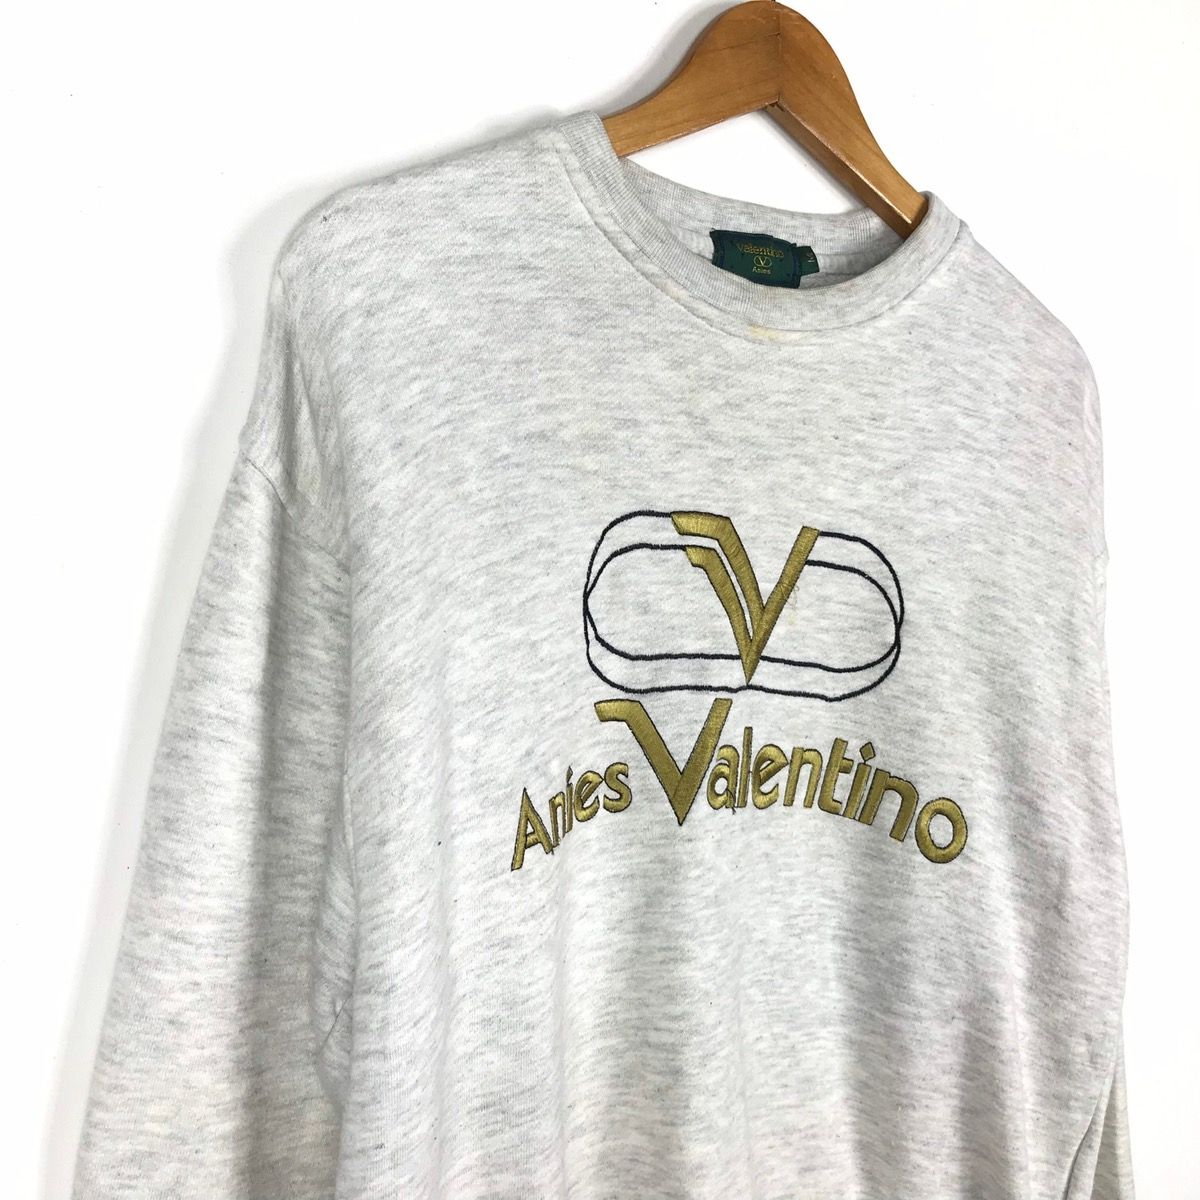 Vintage vintage anies valentino jumper pullover sweatshirt Size US M / EU 48-50 / 2 - 3 Thumbnail